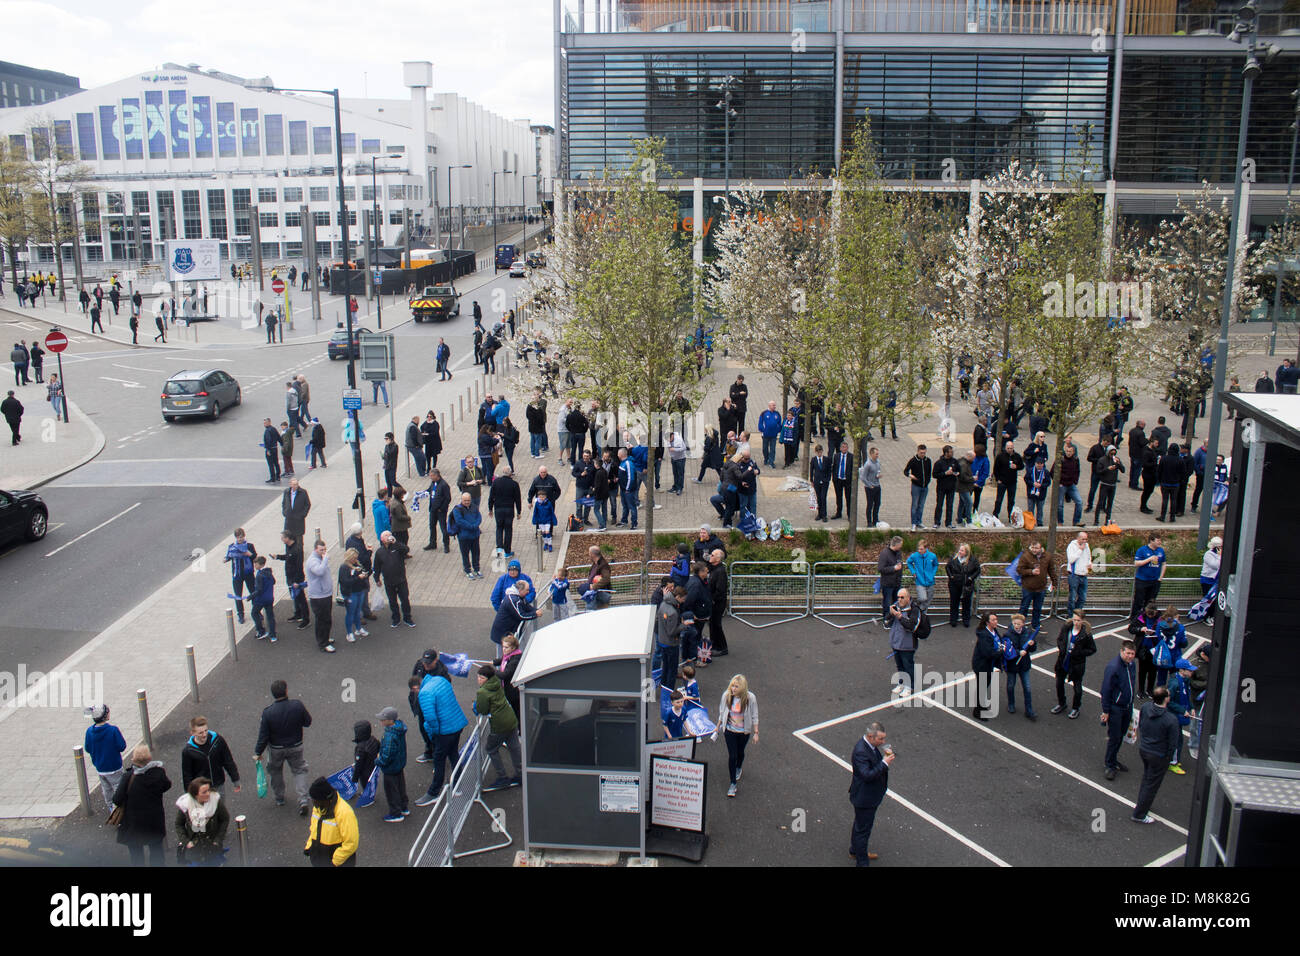 Everton Football Club fans trägt blaue im Wembley Stadion in London. Stockfoto